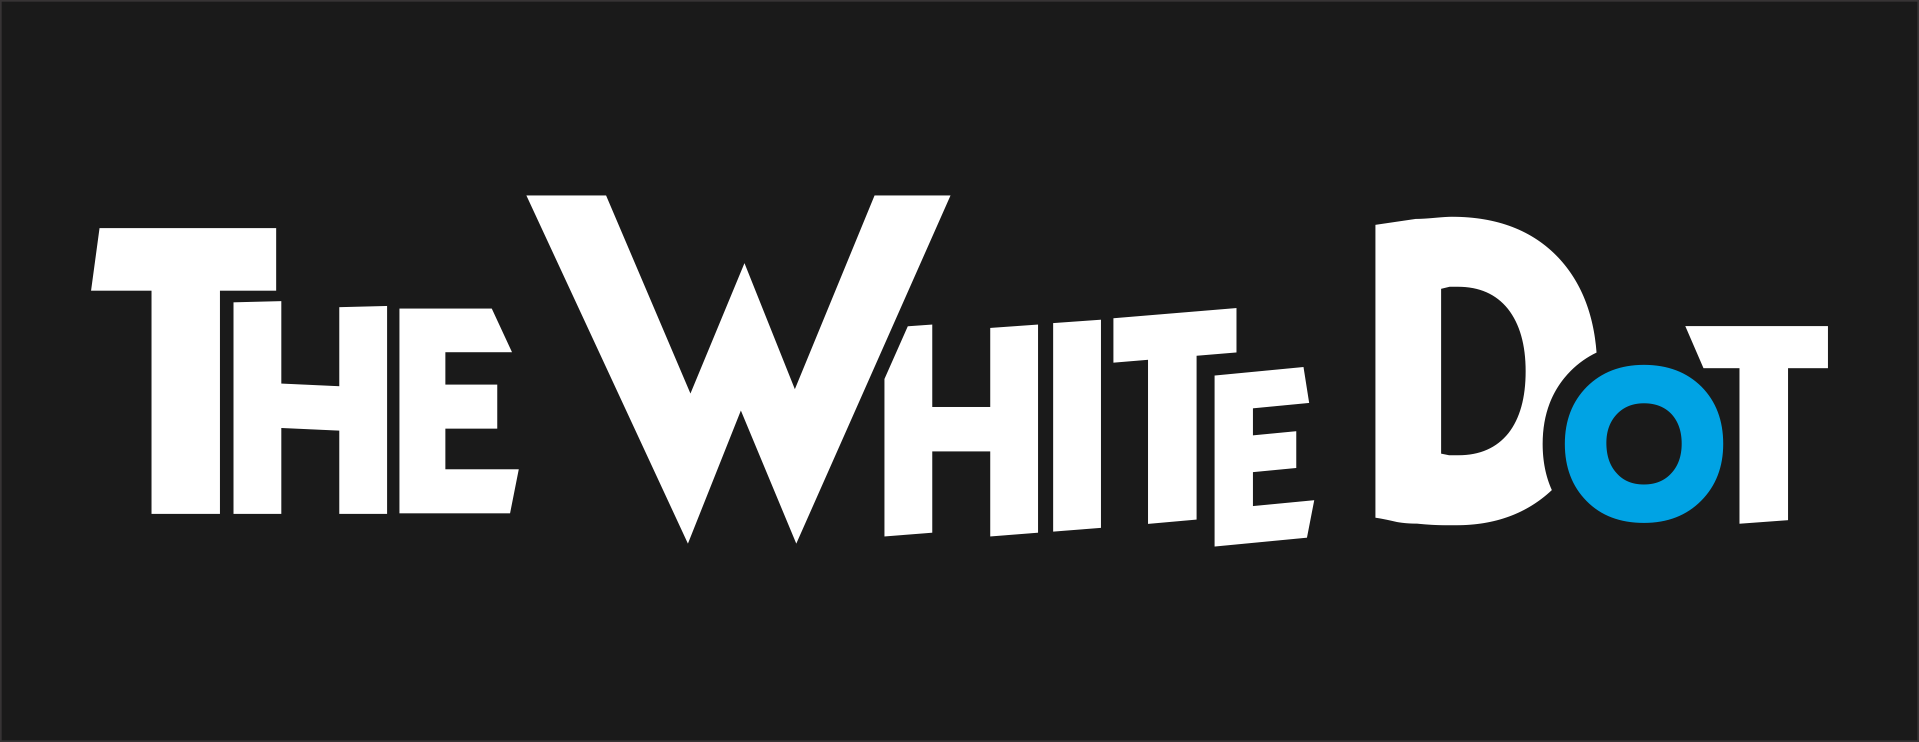 The White Dot logo black